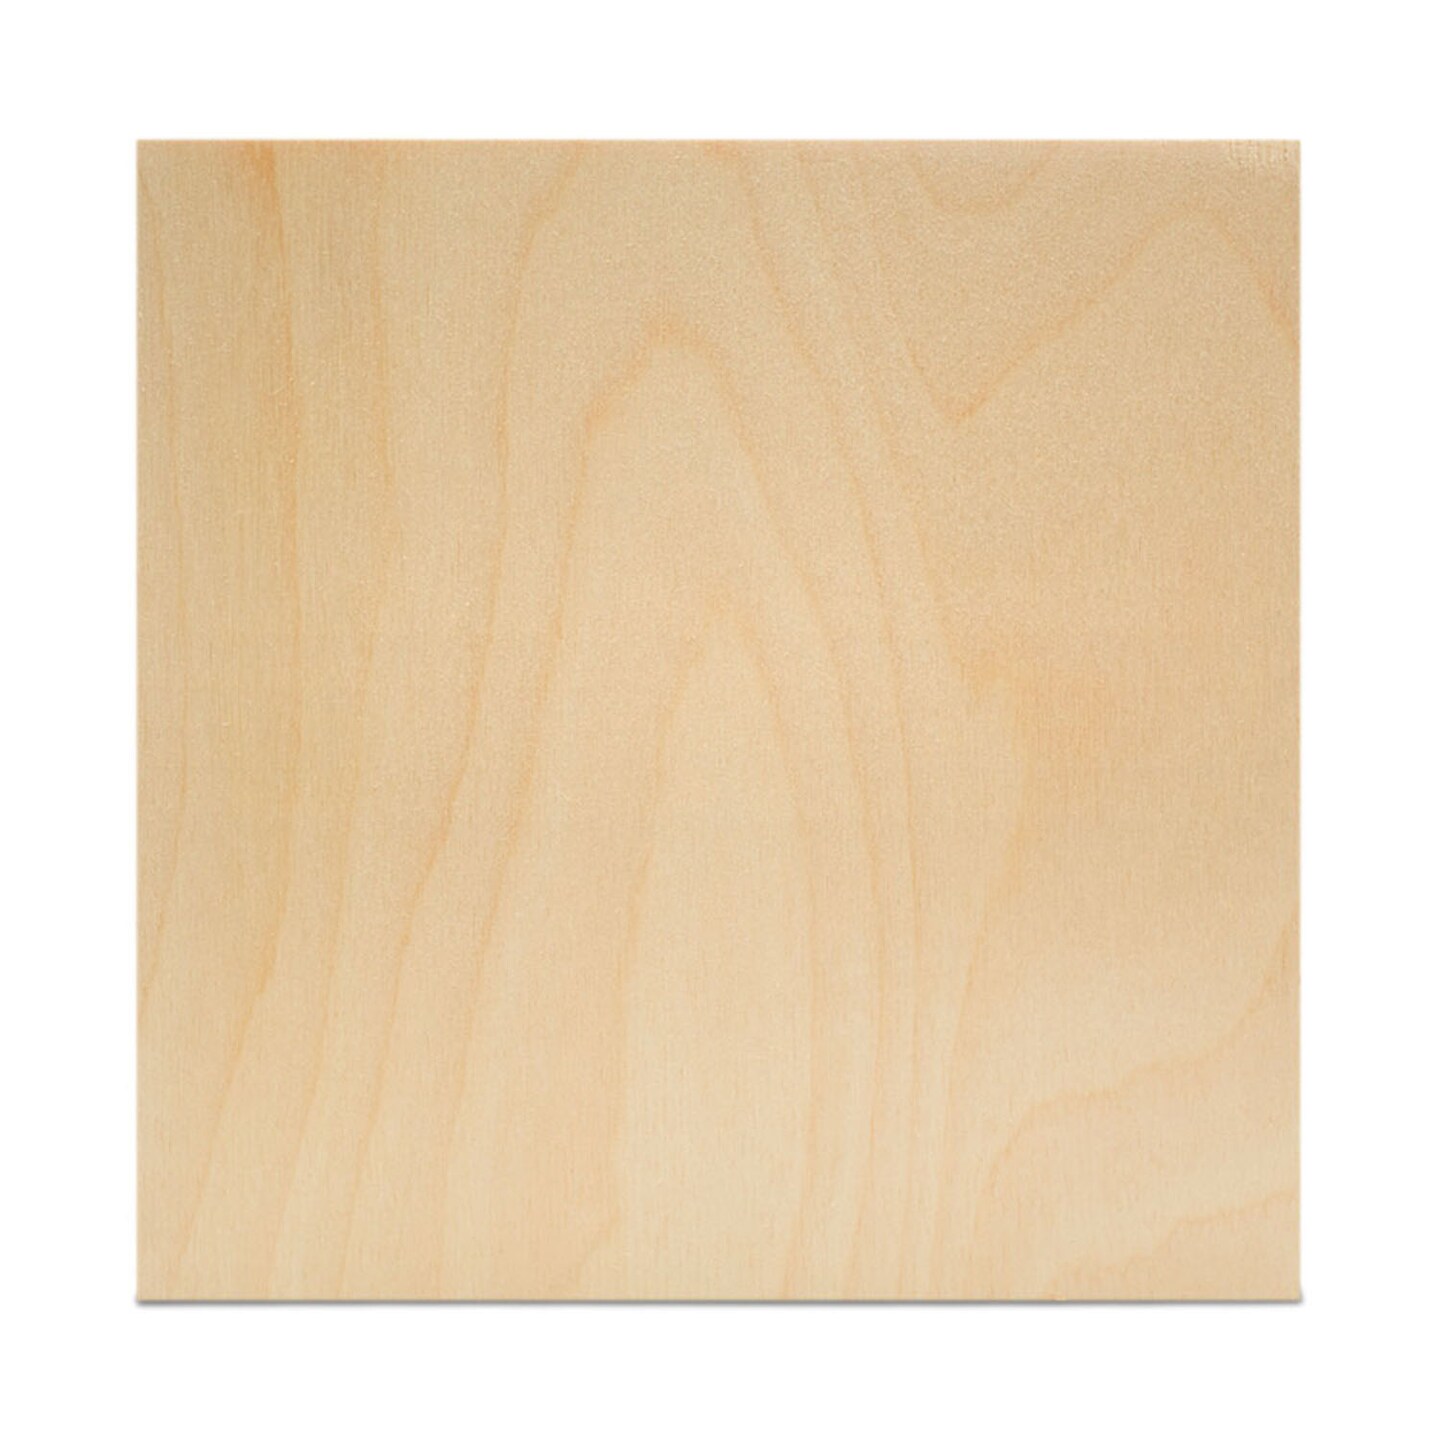 Baltic Birch Plywood Sheets 1/8 x 12 x 12